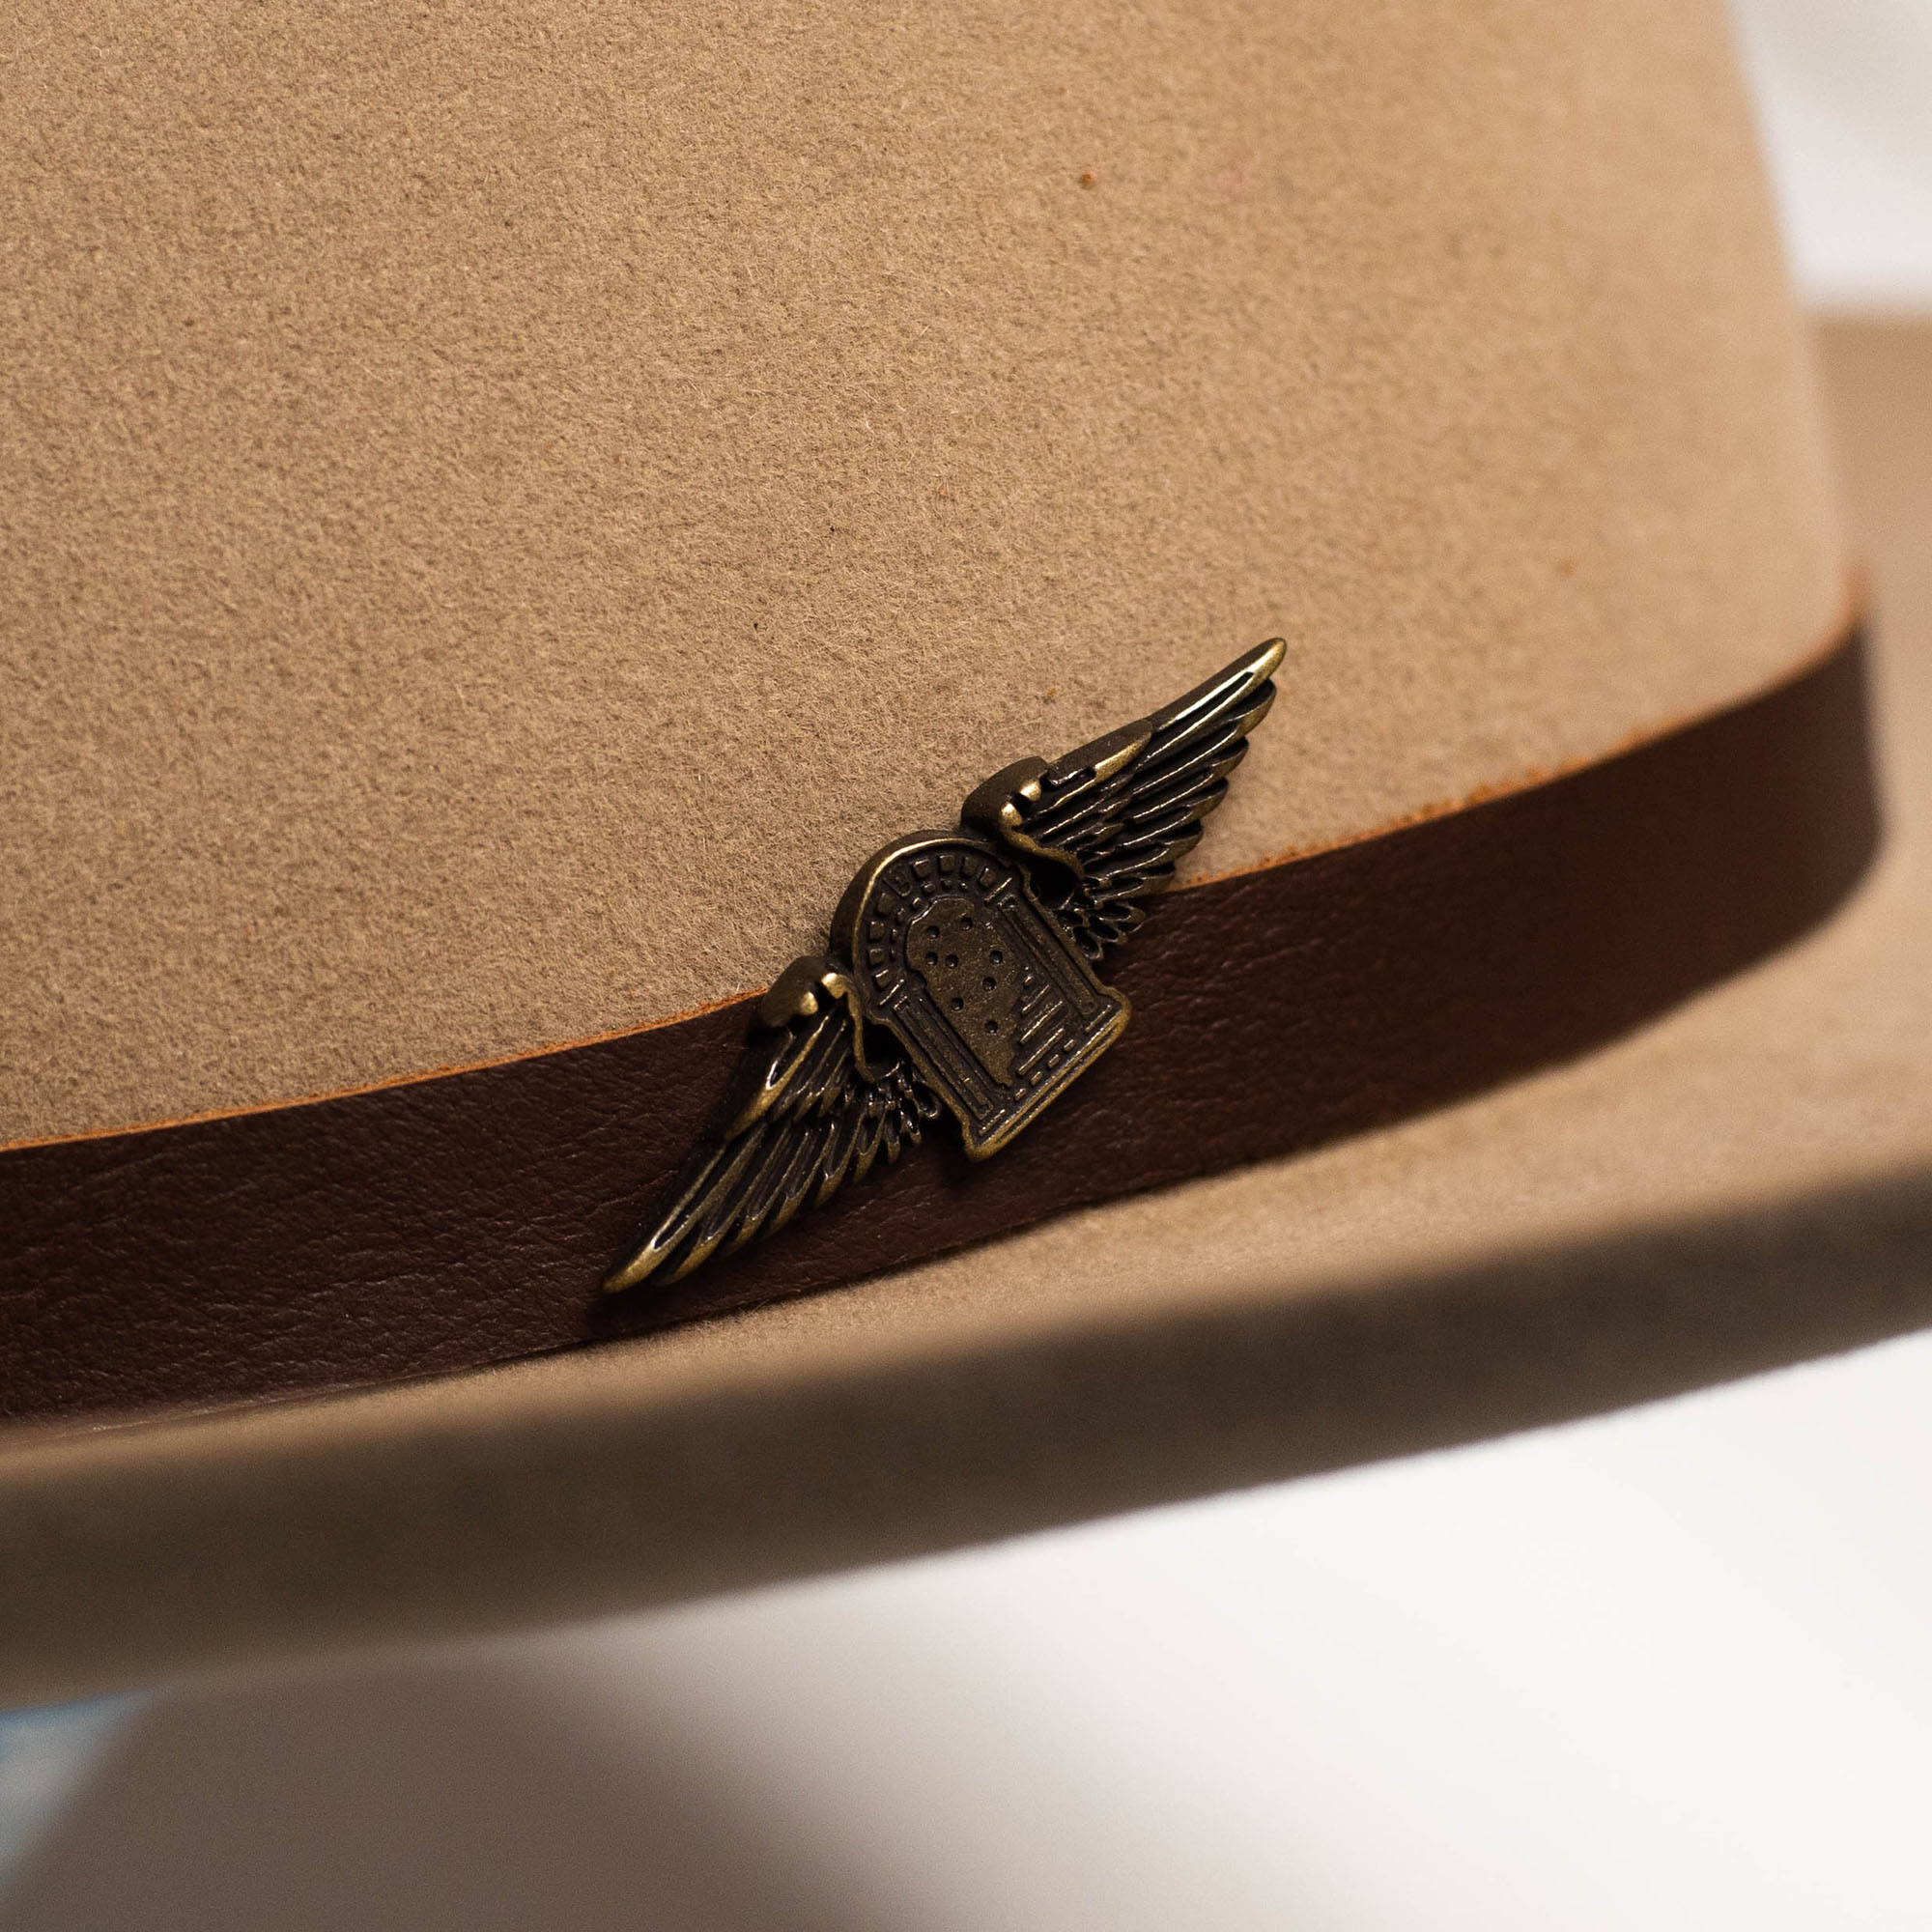 “Furia” Western Hat